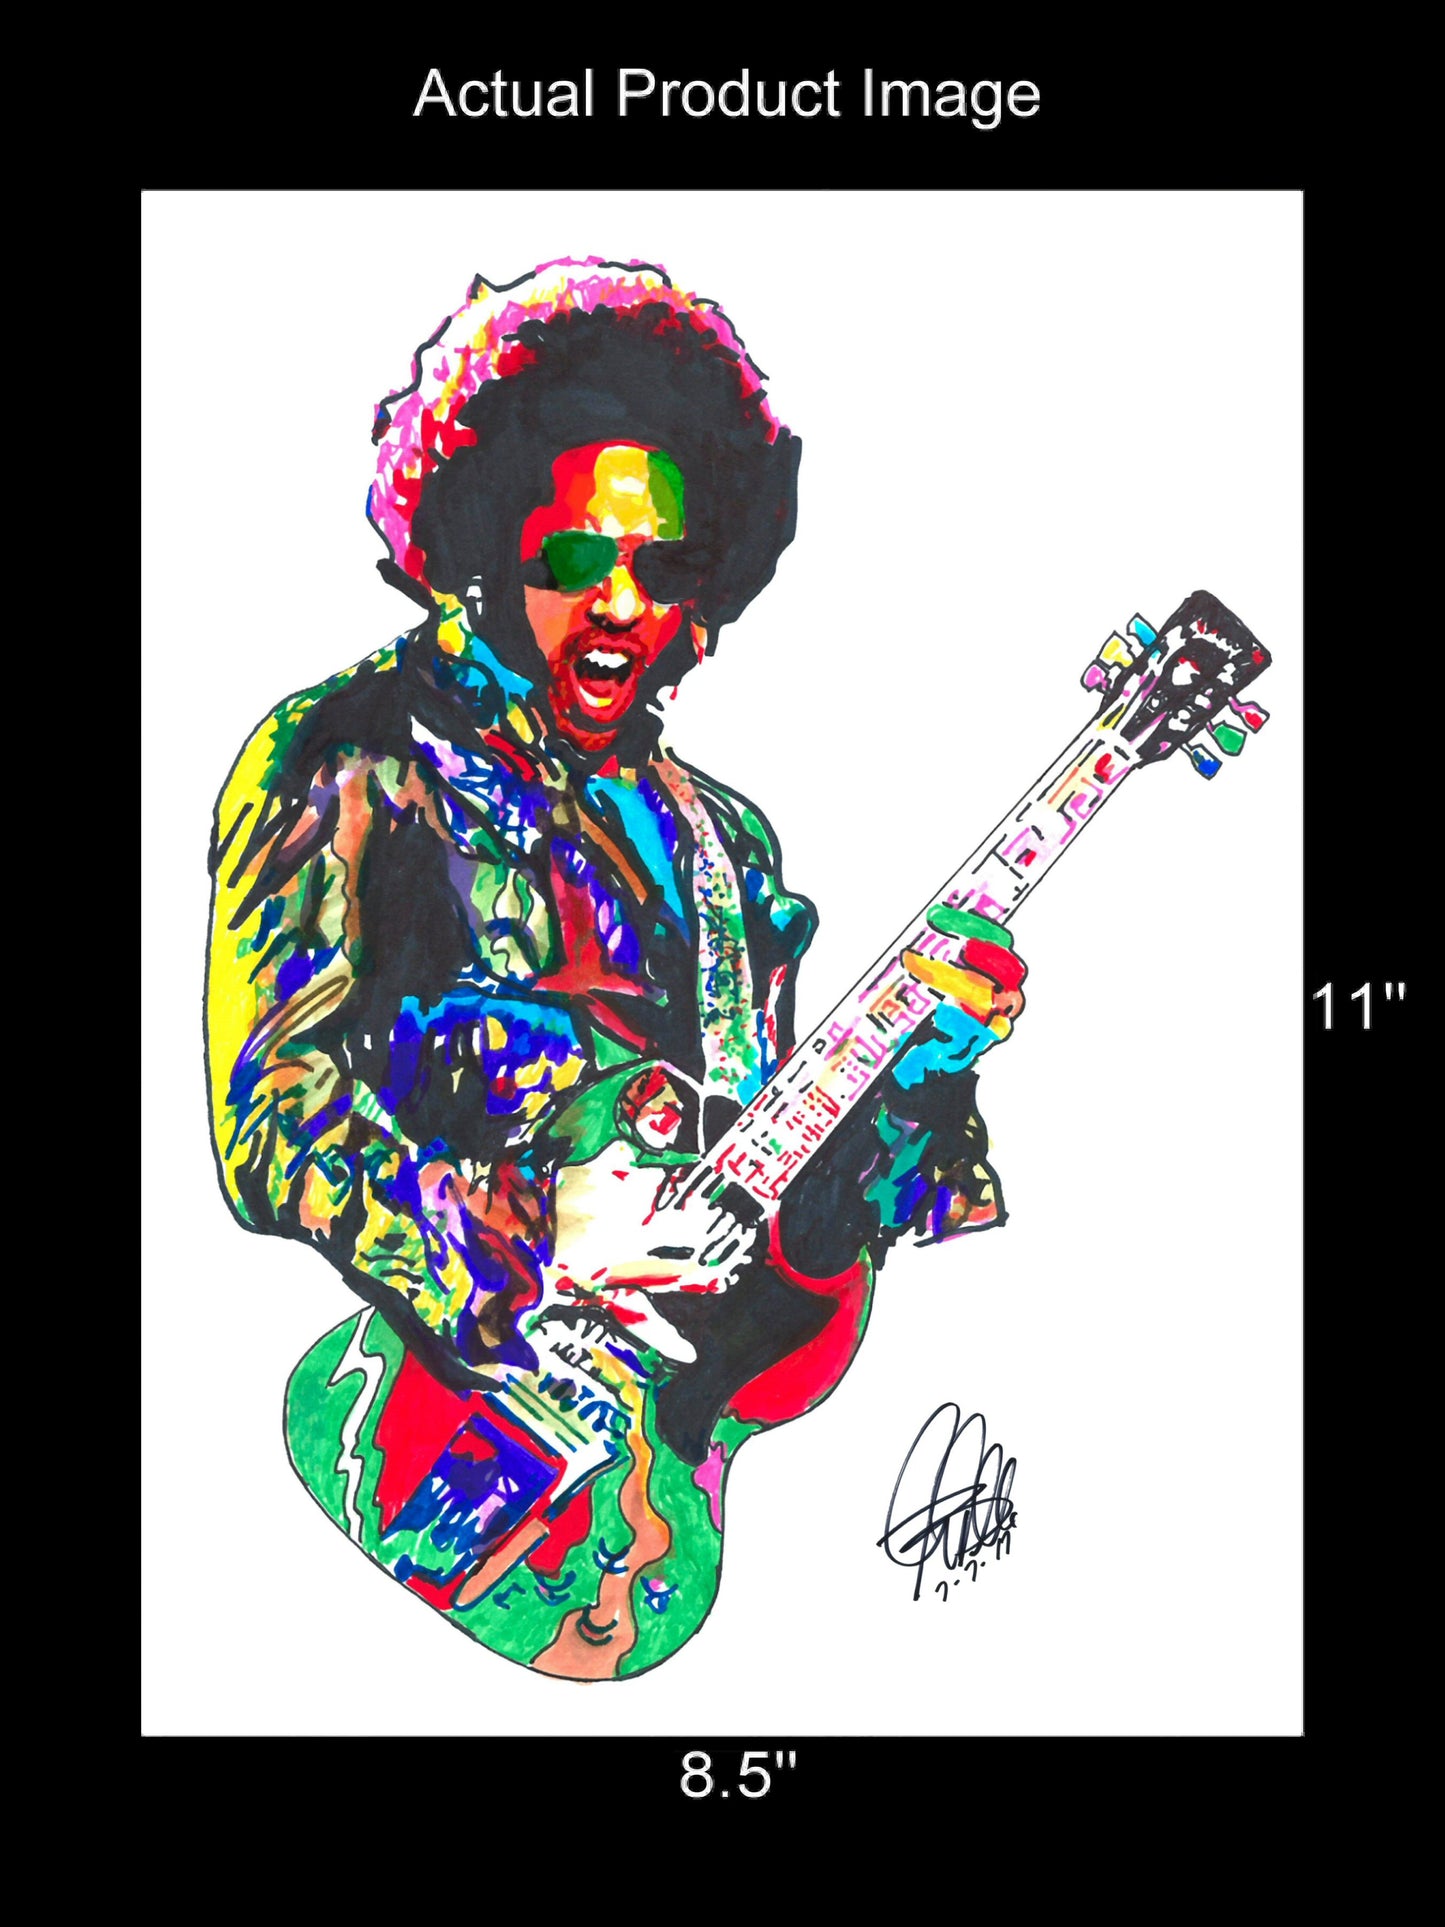 Lenny Kravitz Singer Guitar Rock Music Poster Print Wall Art 8.5x11